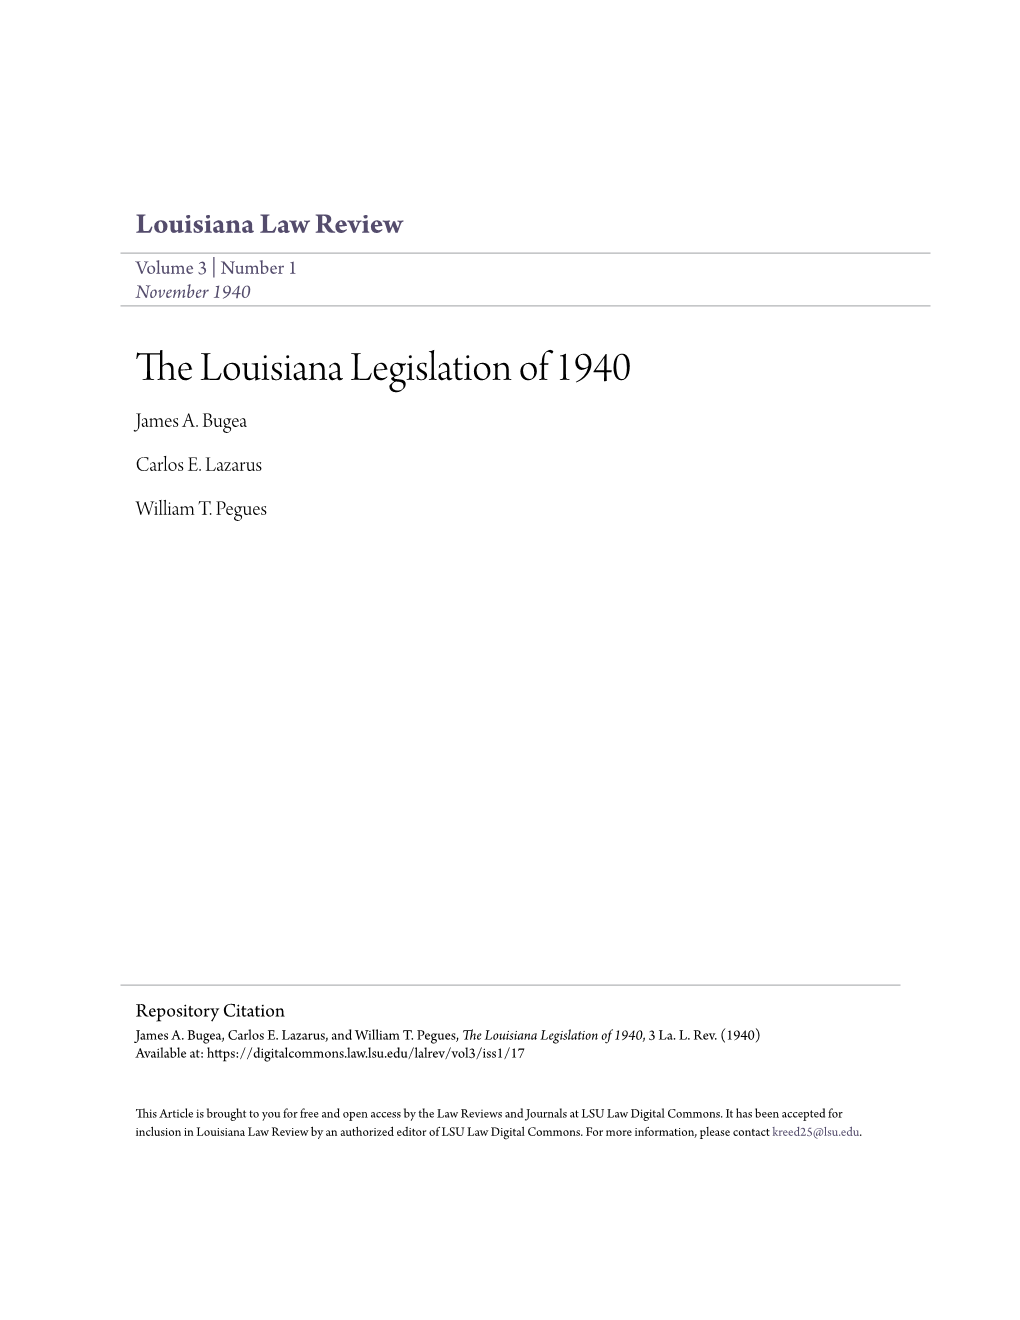 The Louisiana Legislation of 1940 James A